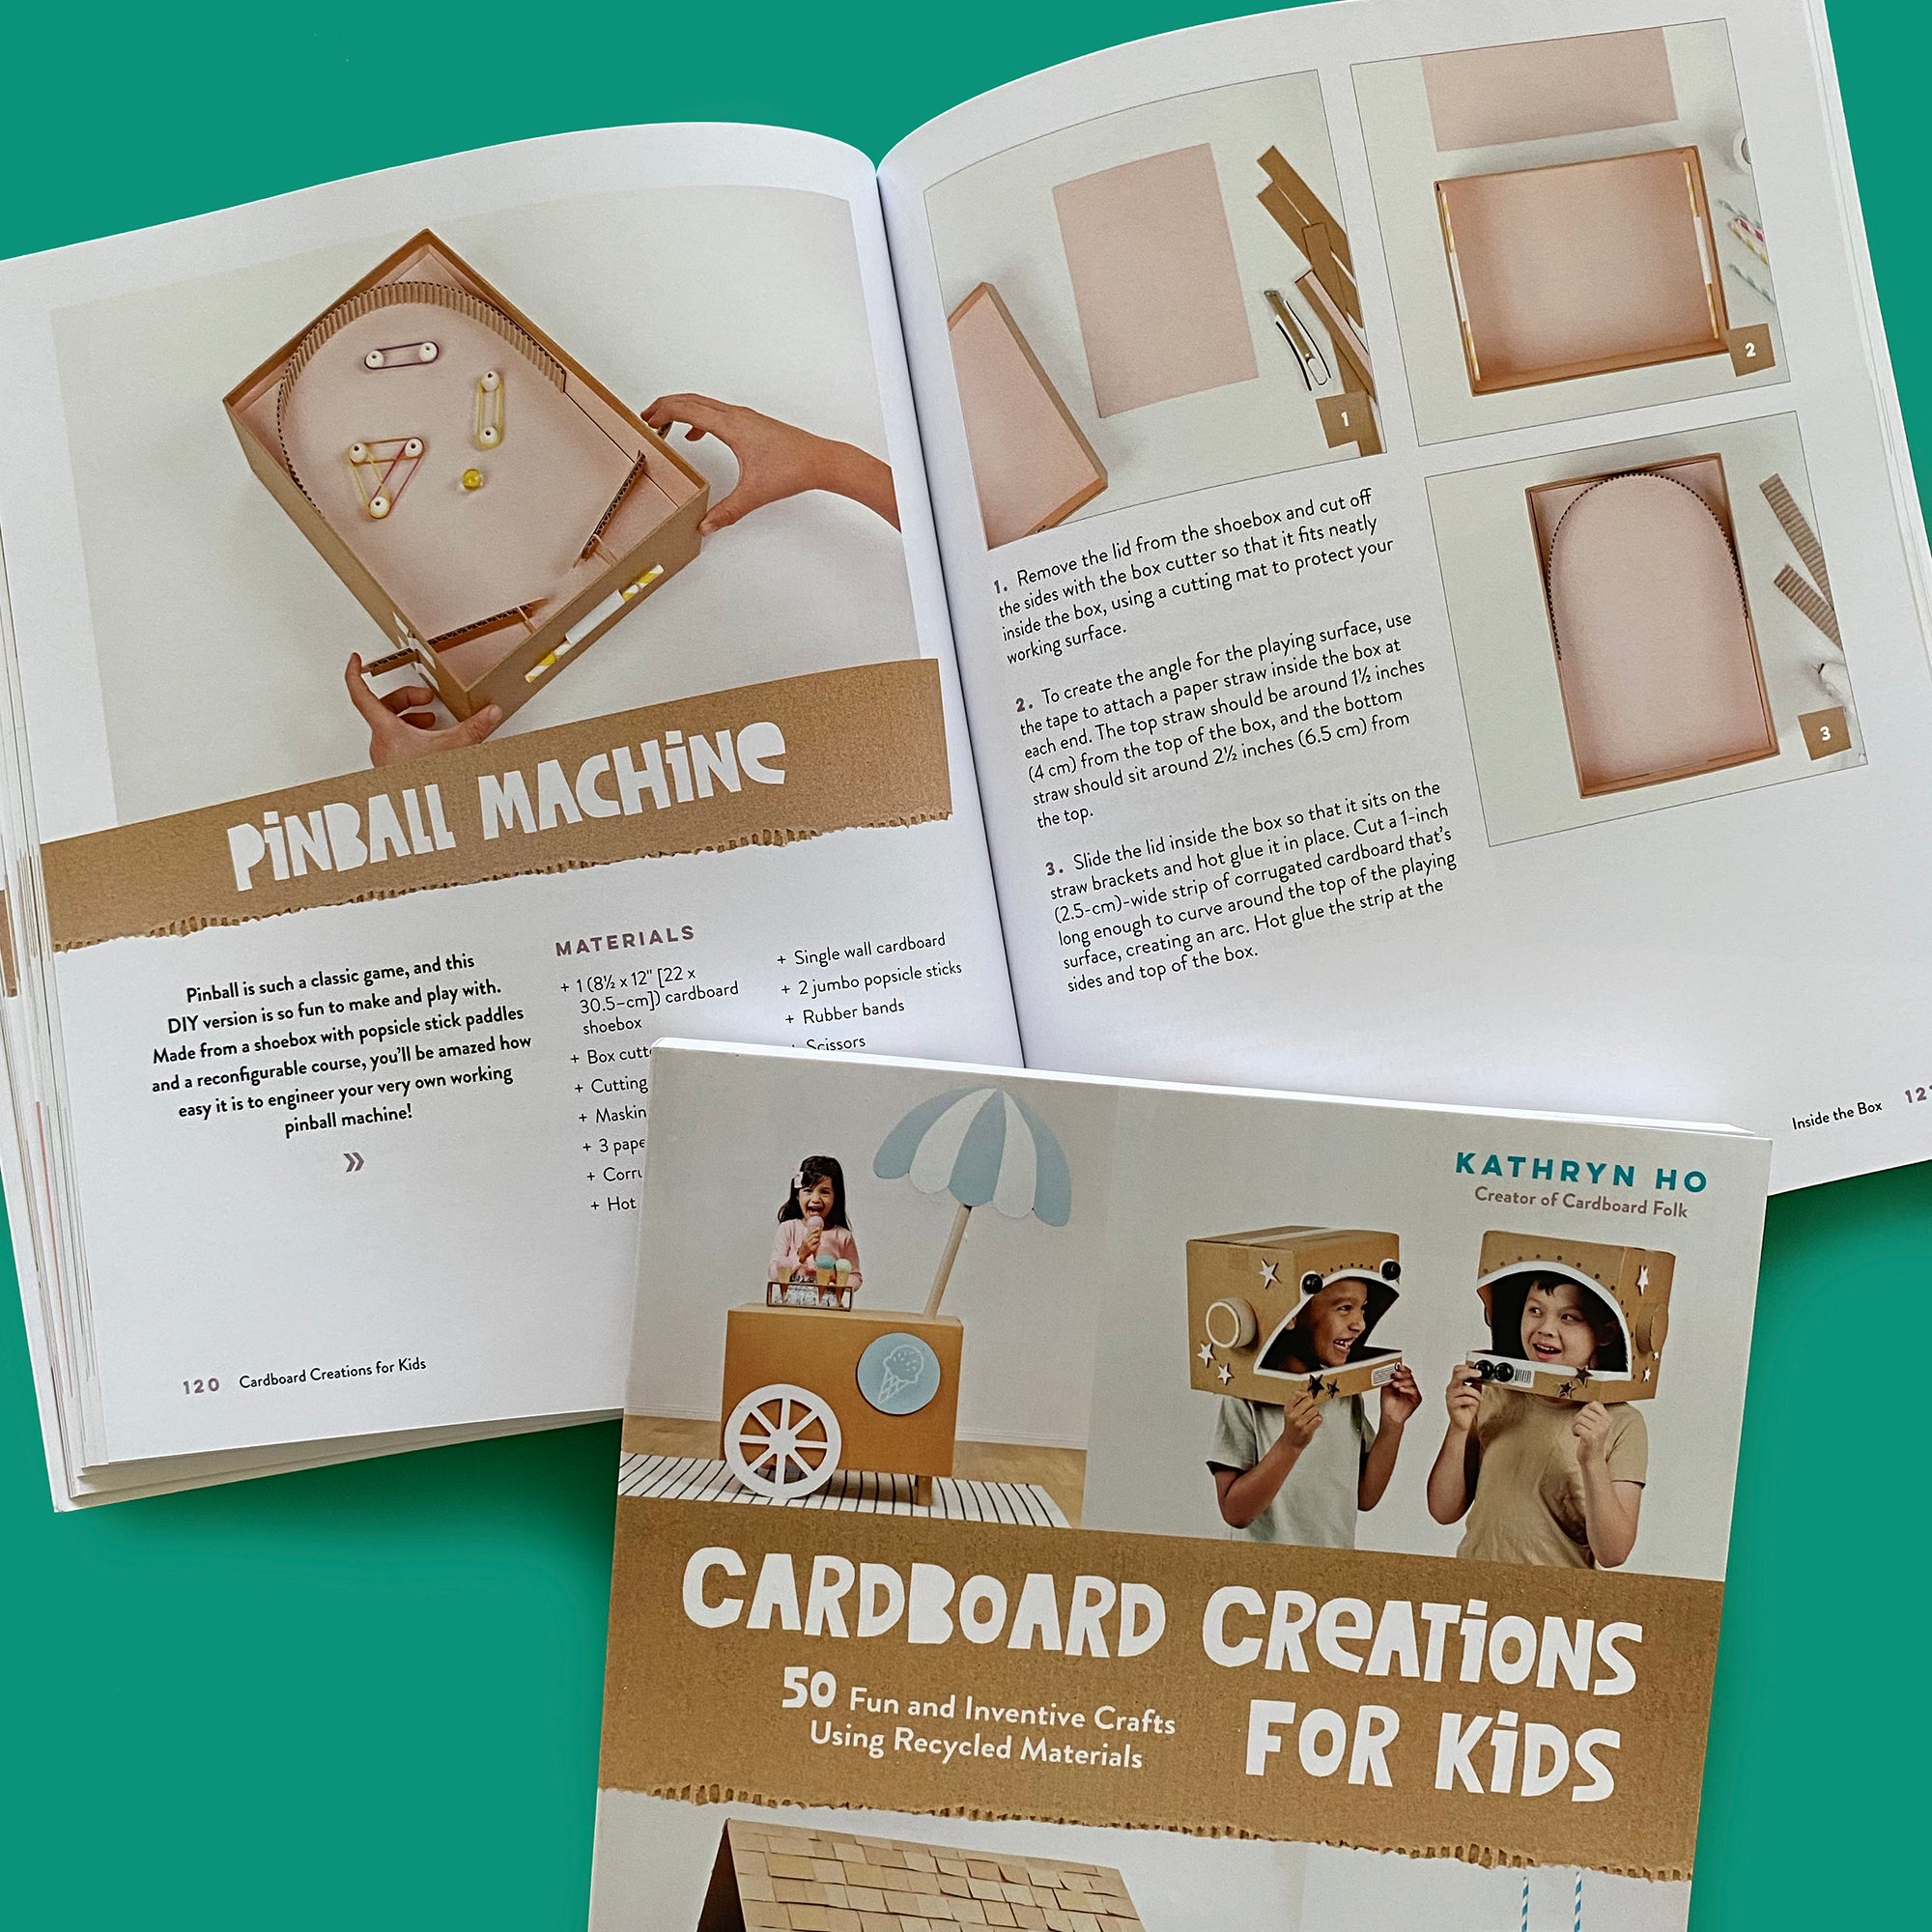 Cardboard Creations for Kids